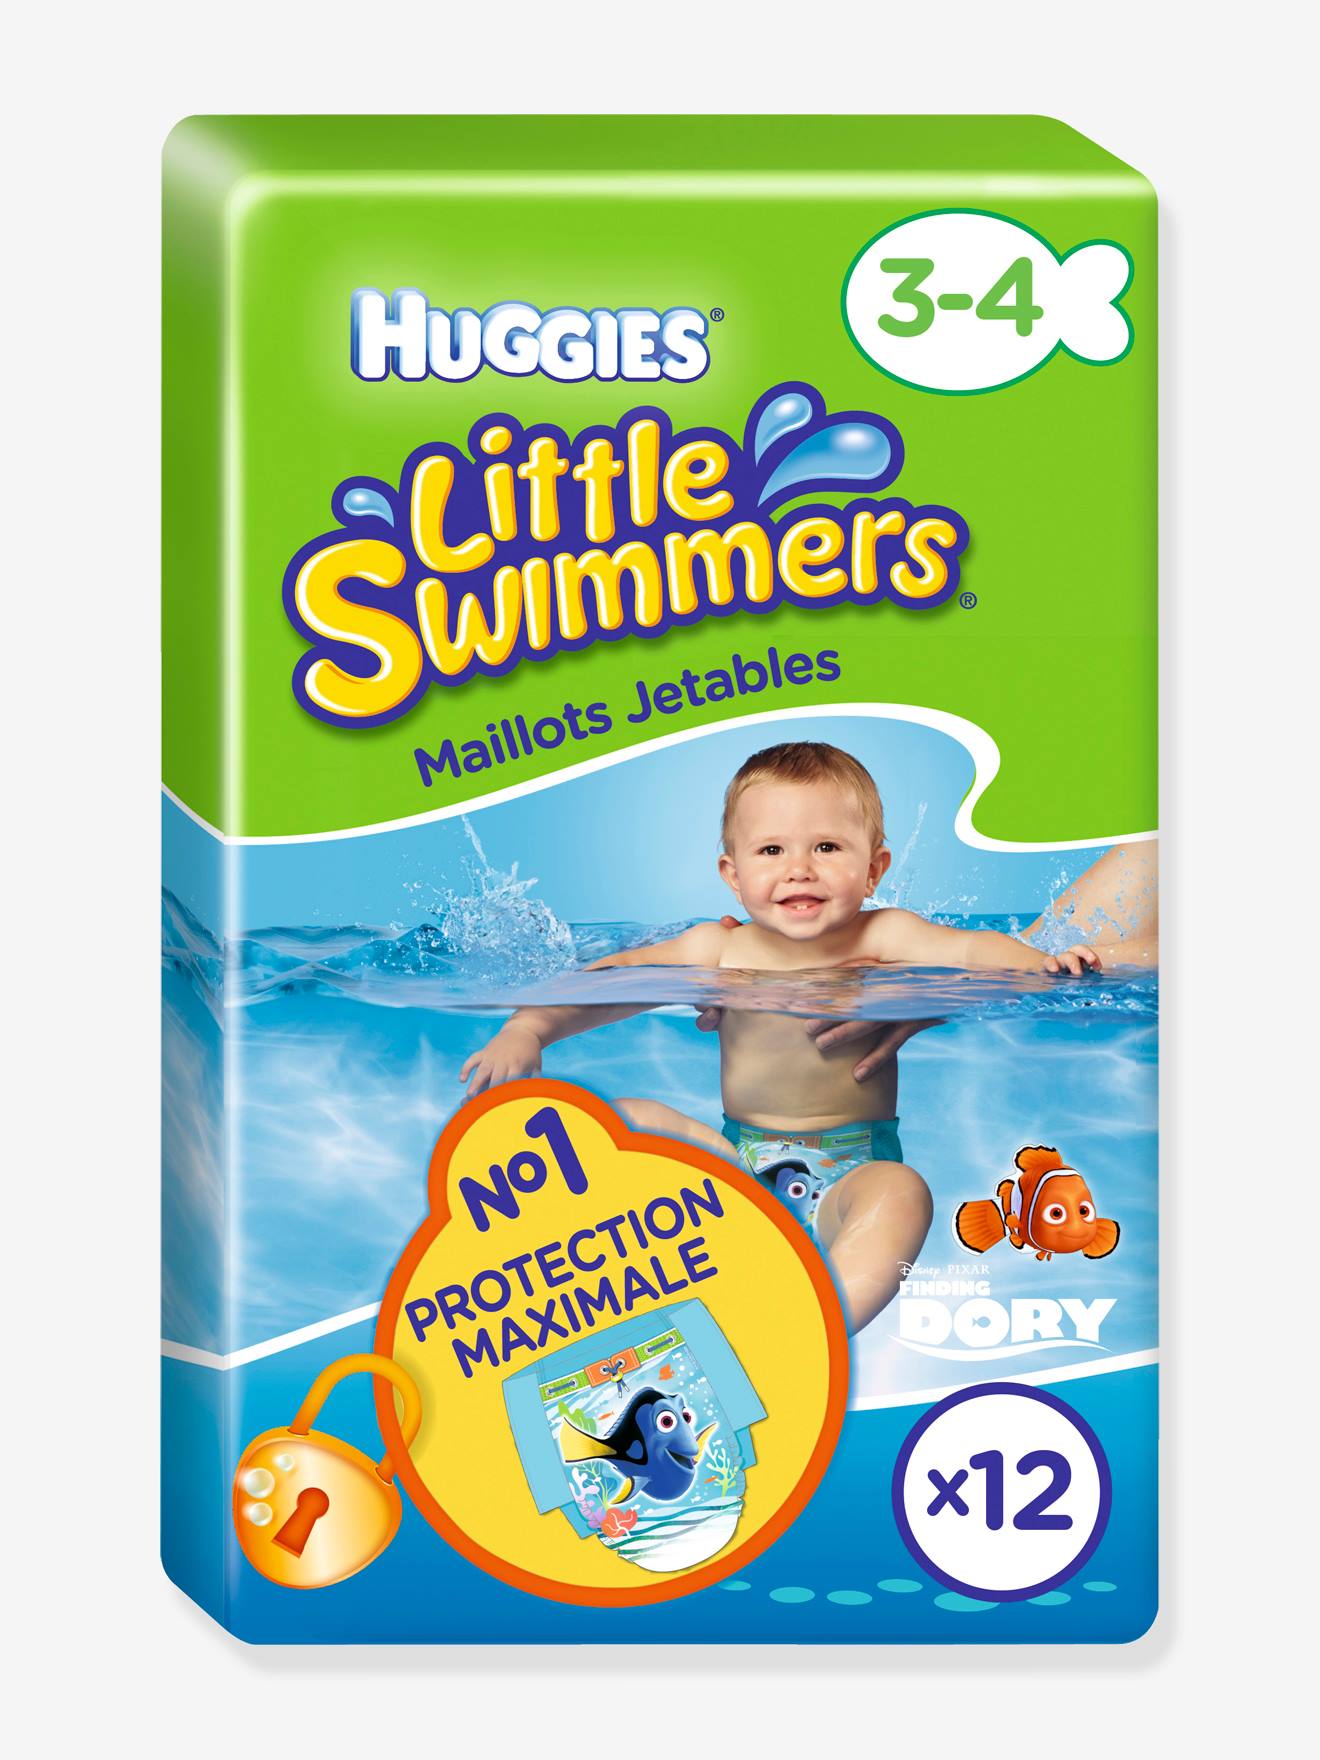 Couche de piscine jetable HUGGIES Little Swimmers, taille 3-4, lot de 12 dory